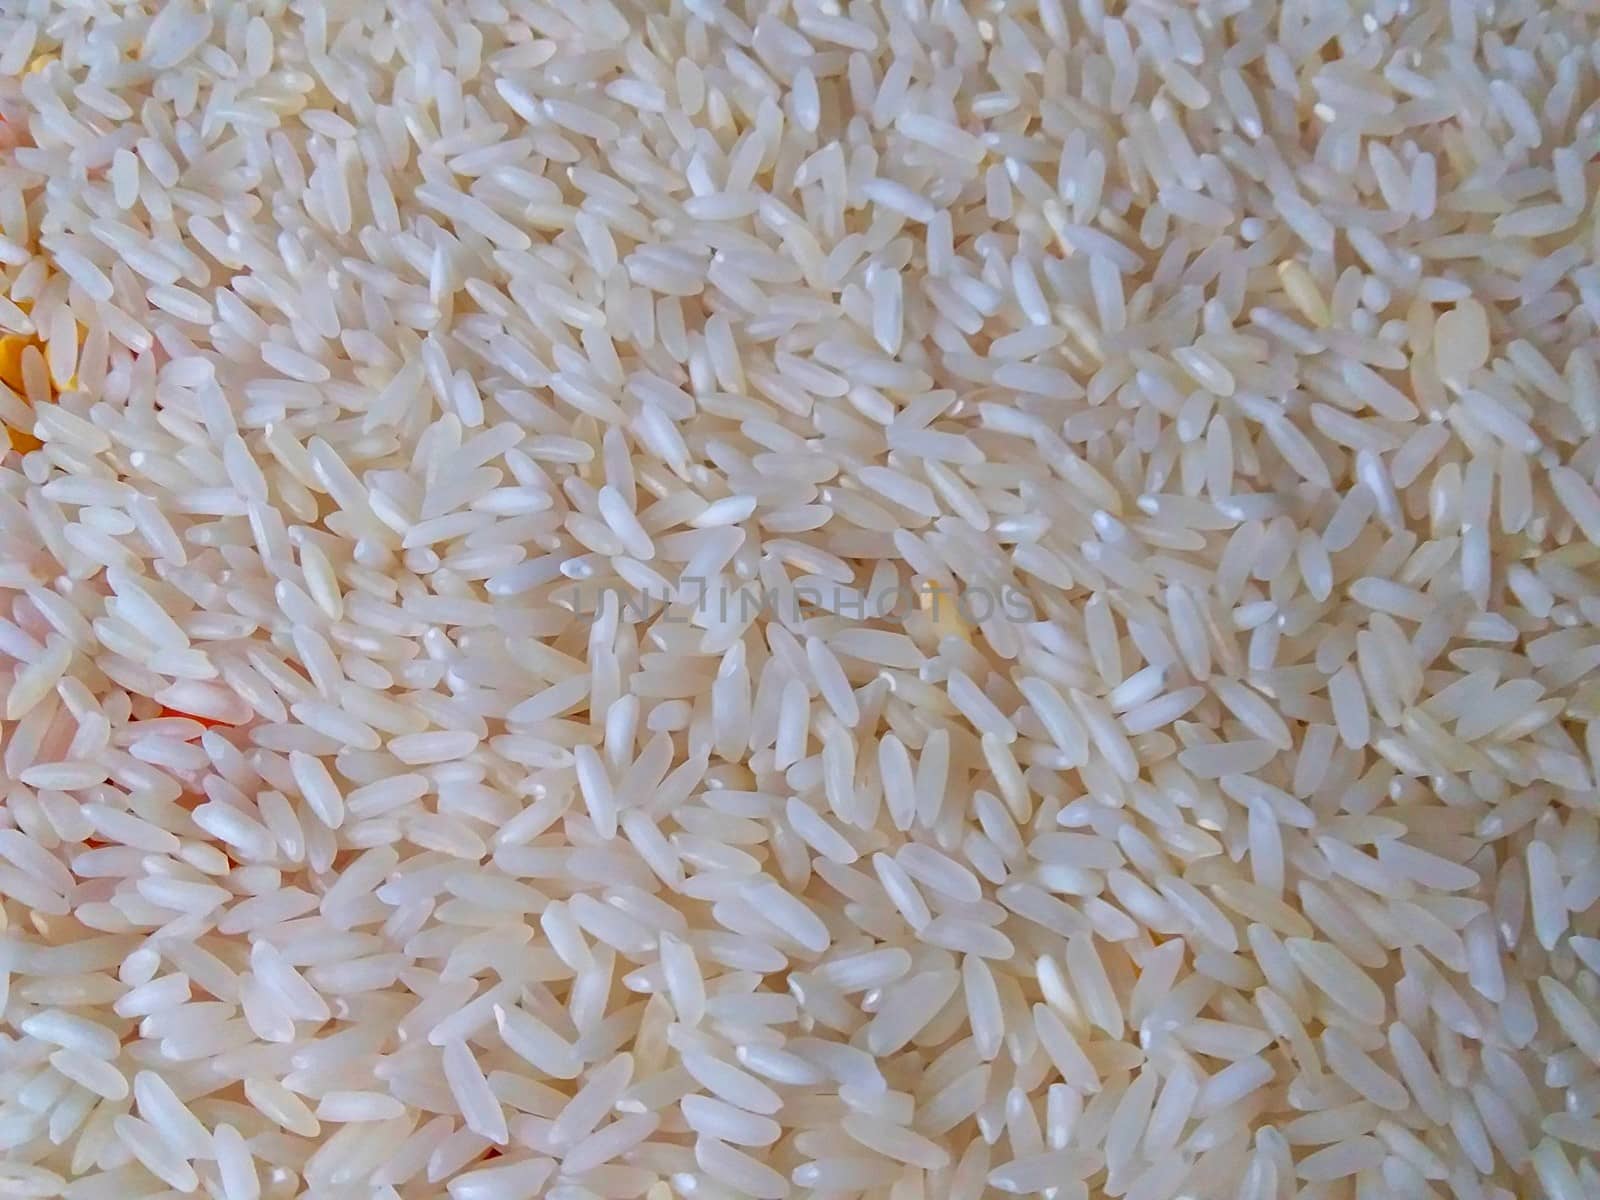 the raw rice grain